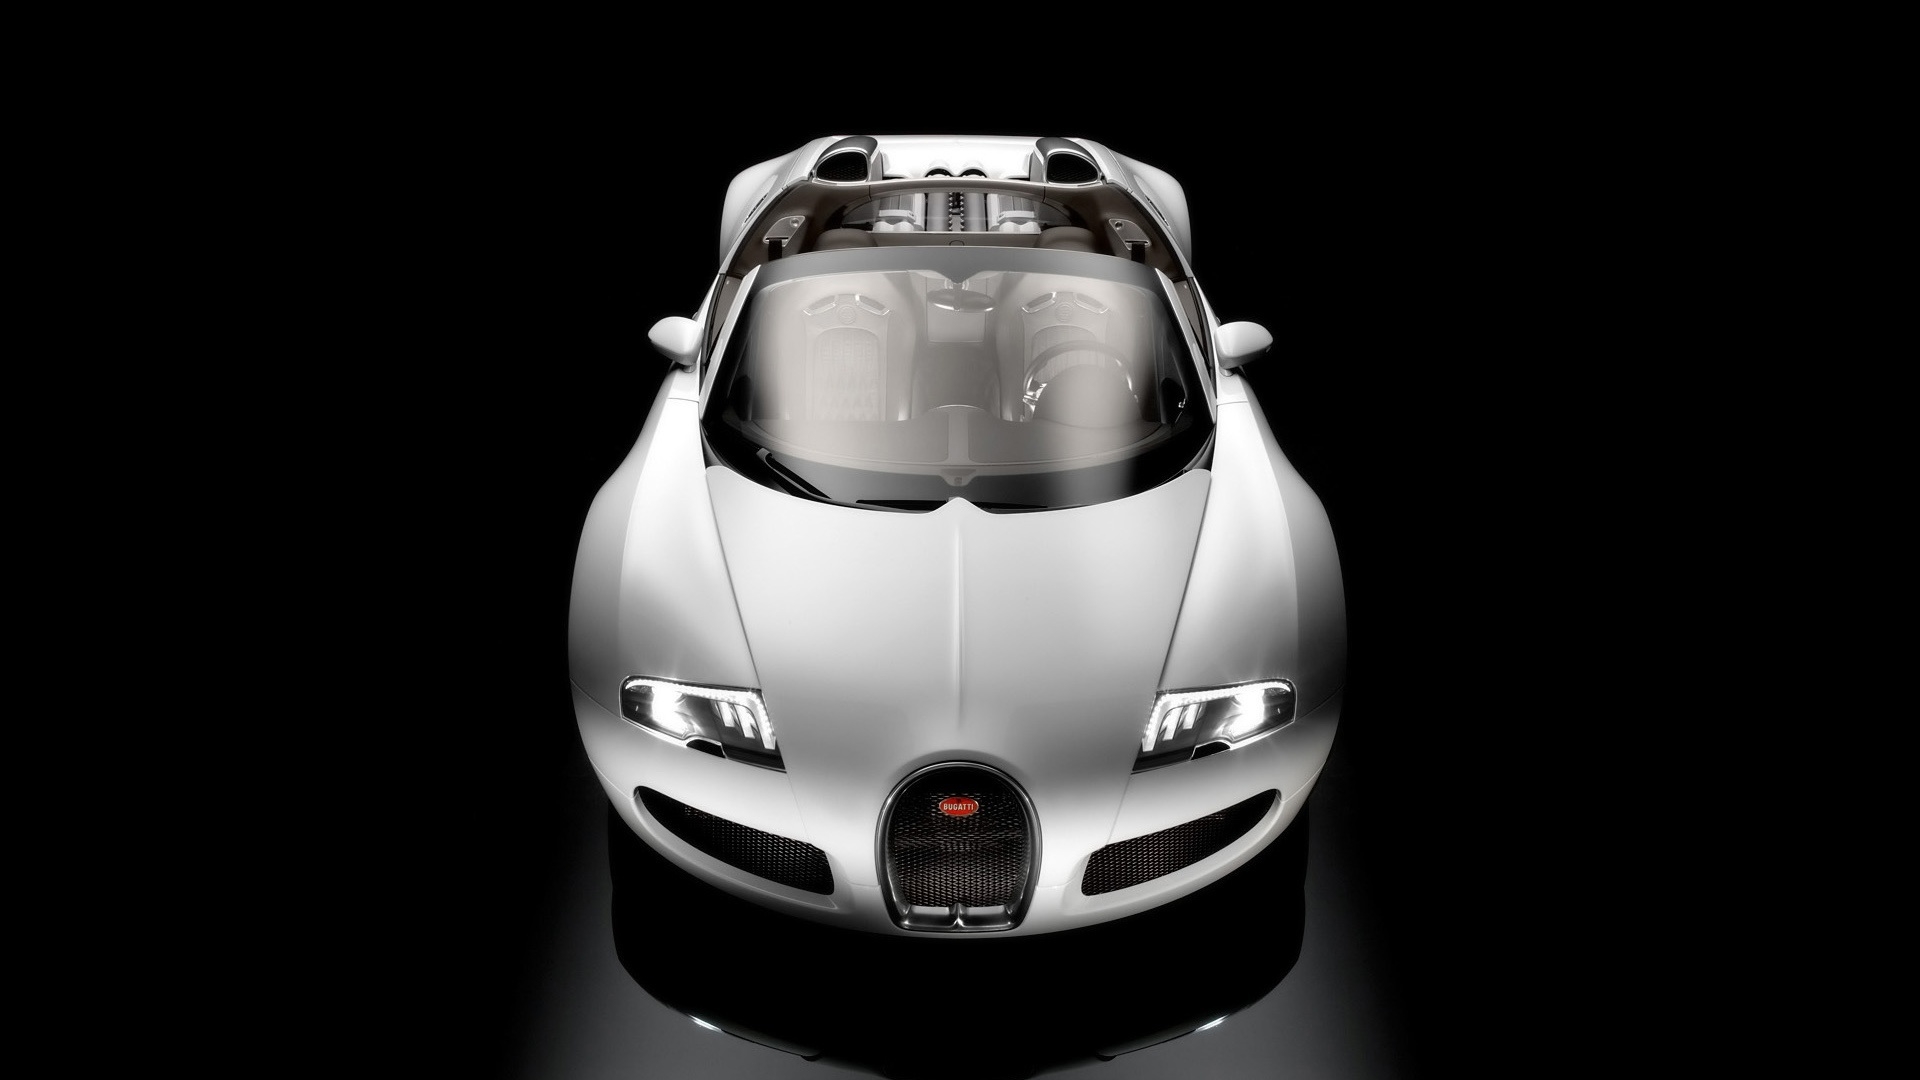 Bugatti Veyron 16.4 Grand Sport Production Version 2009 - Studio Front Top for 1920 x 1080 HDTV 1080p resolution